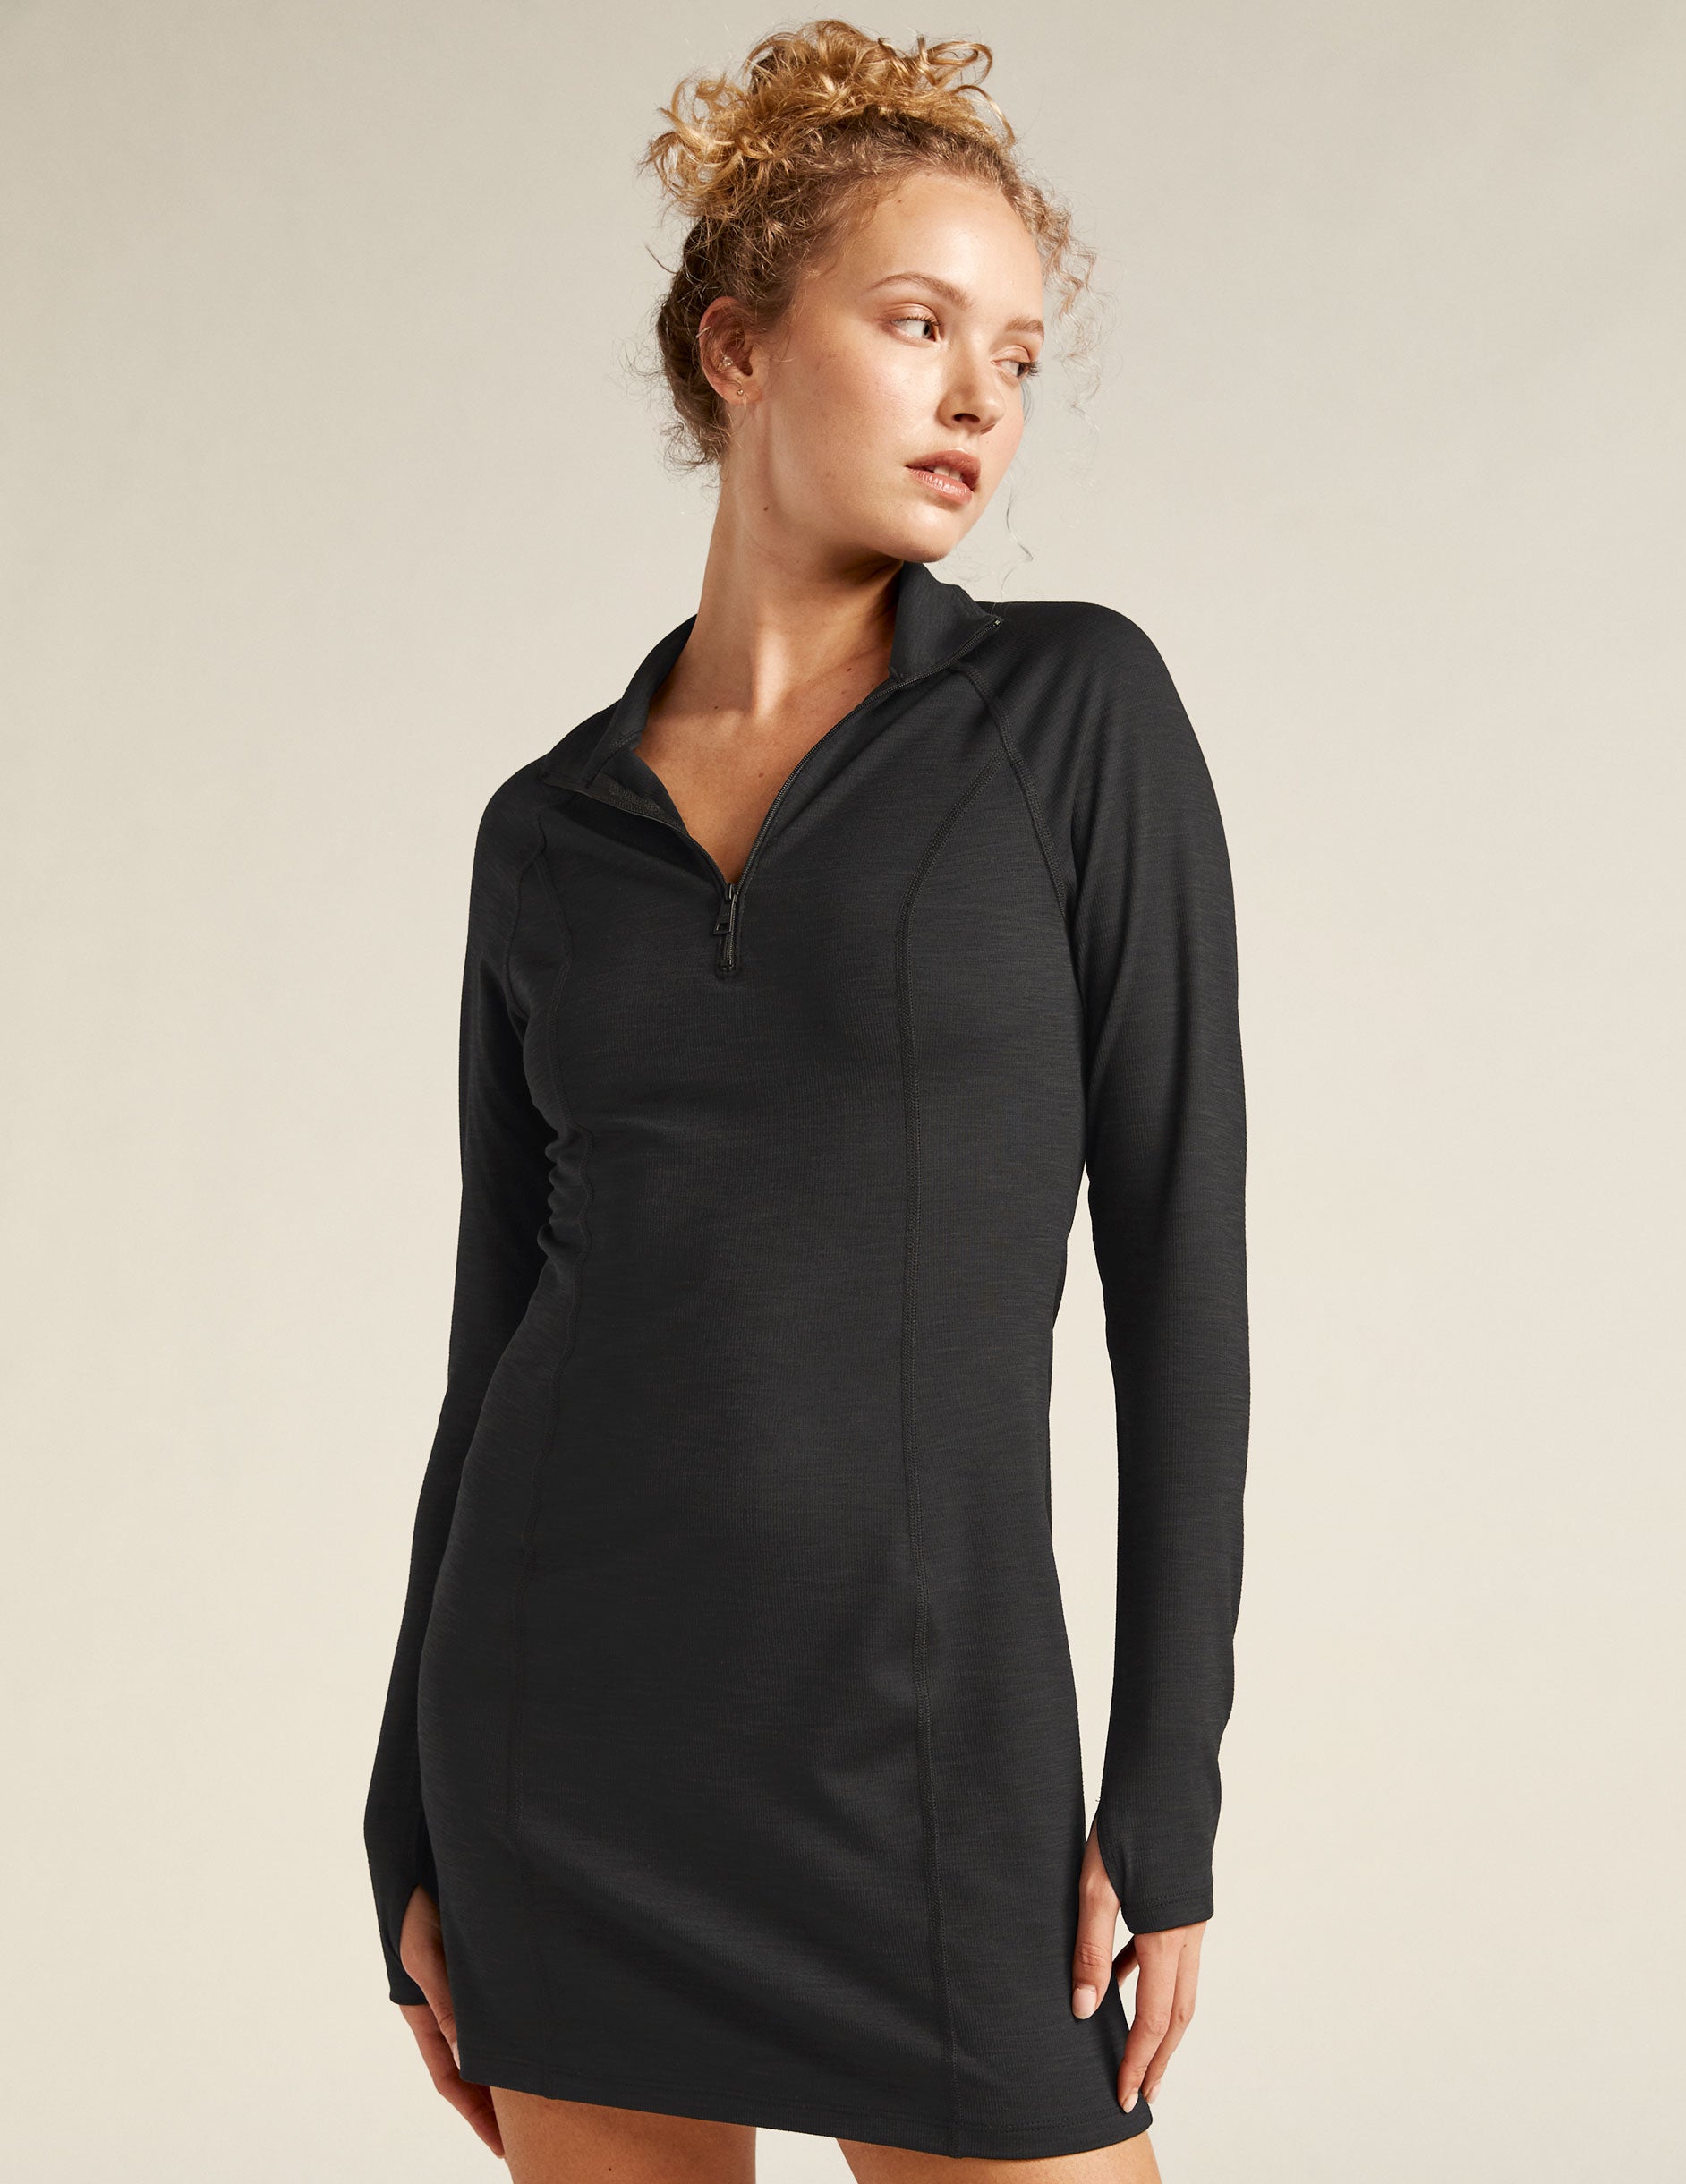 black midi dress with quarter-zup neckline. 